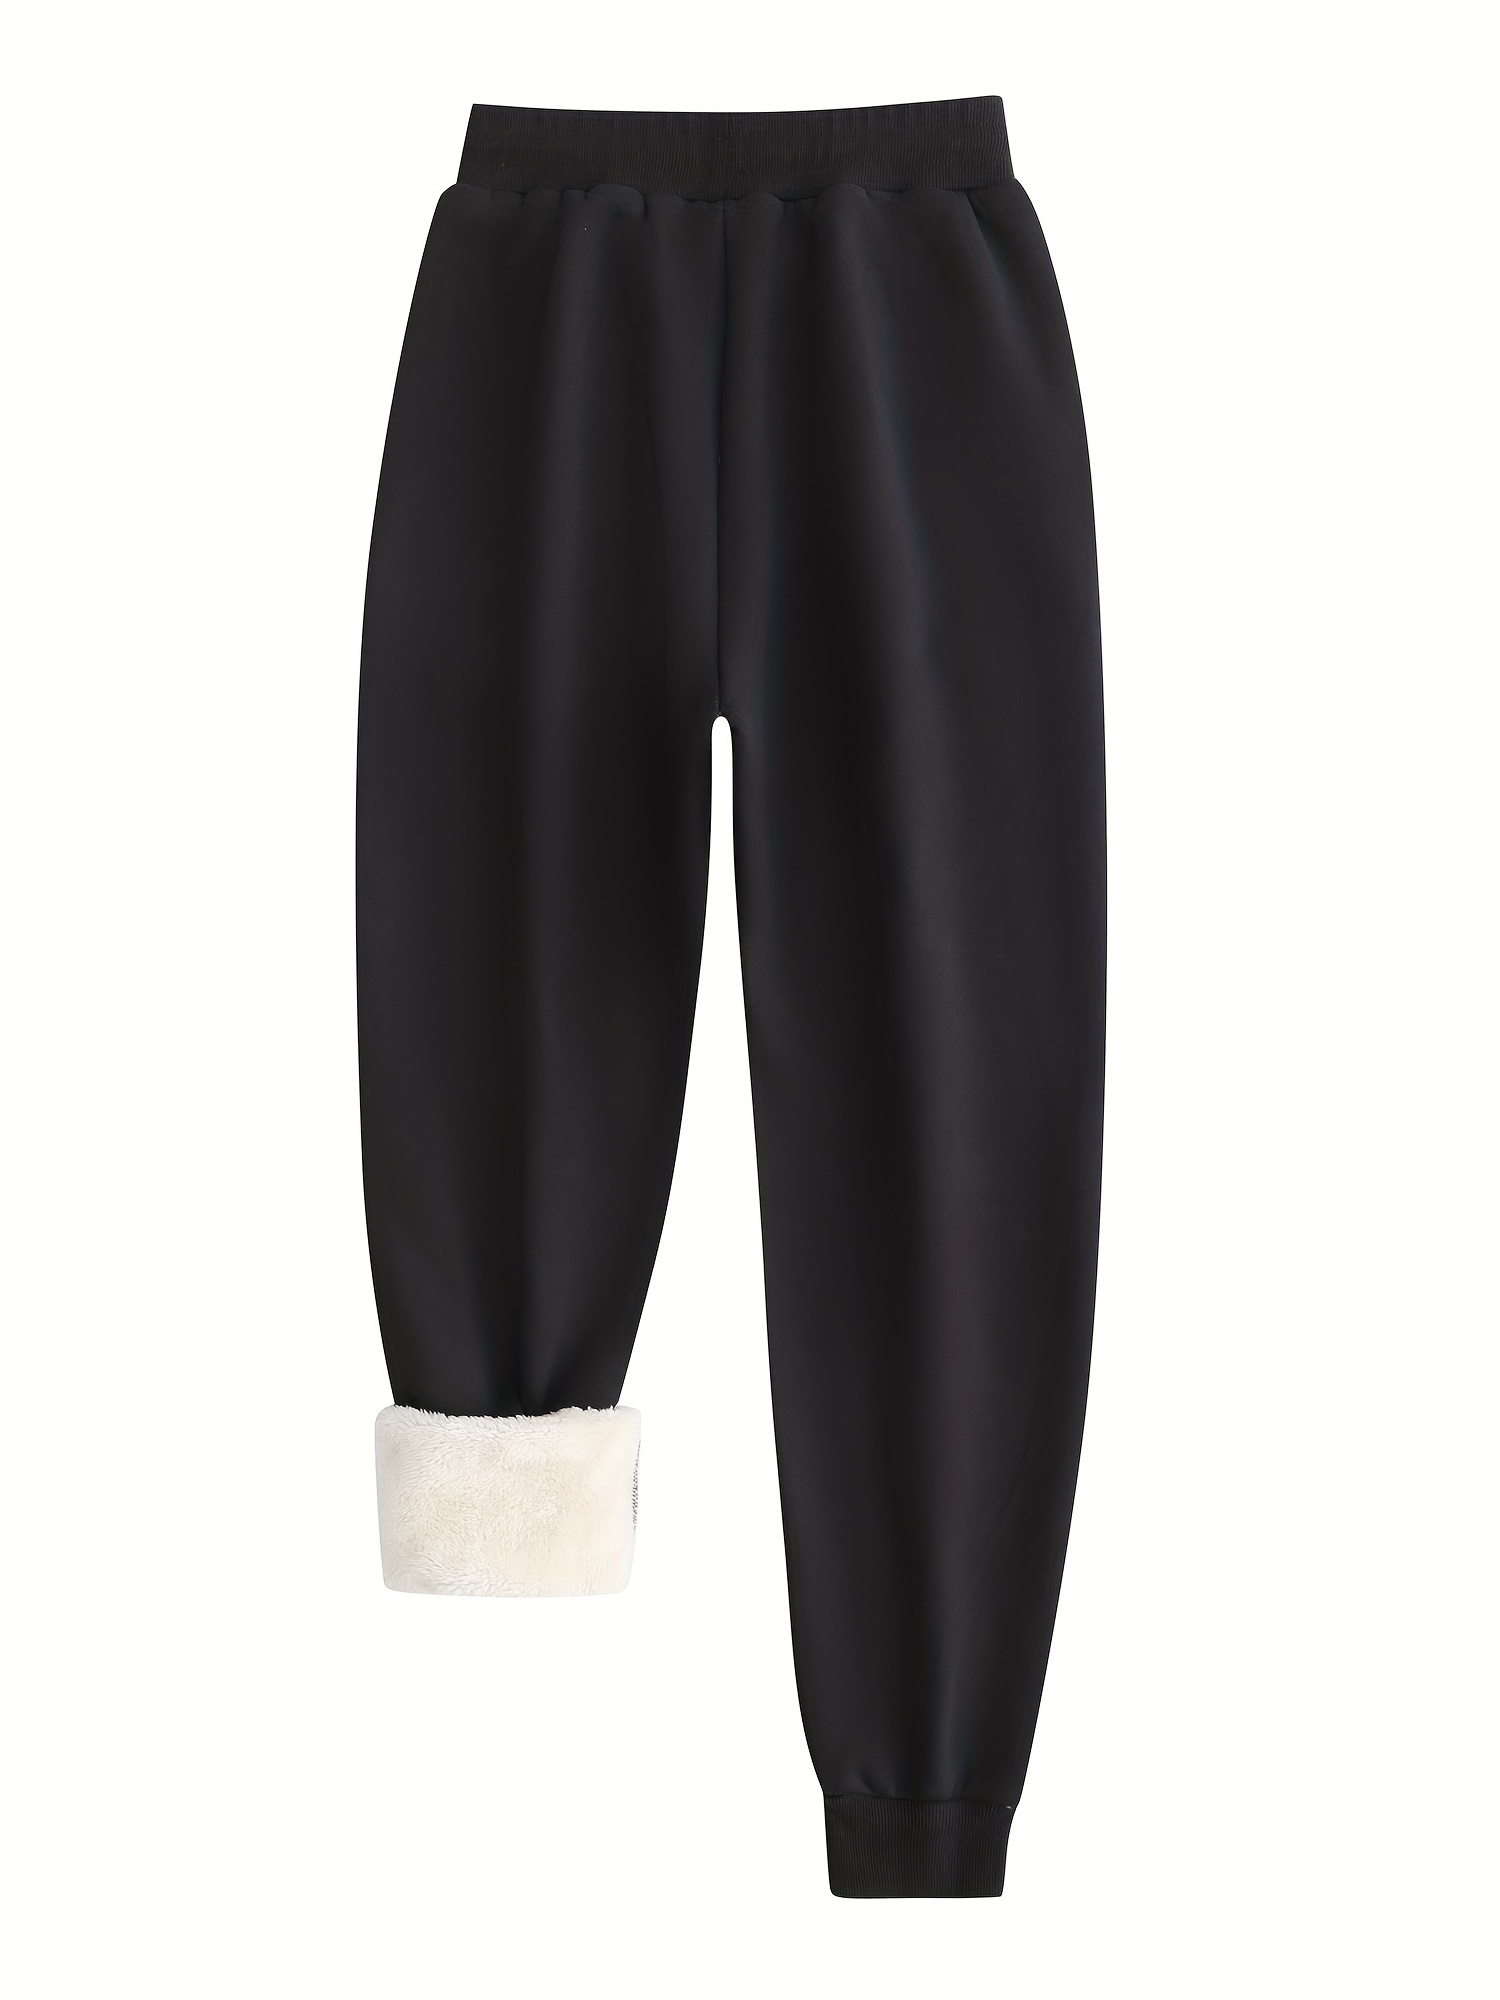 plush thermal pants, winter plush thermal pants casual drawstring pocket pants womens clothing details 18